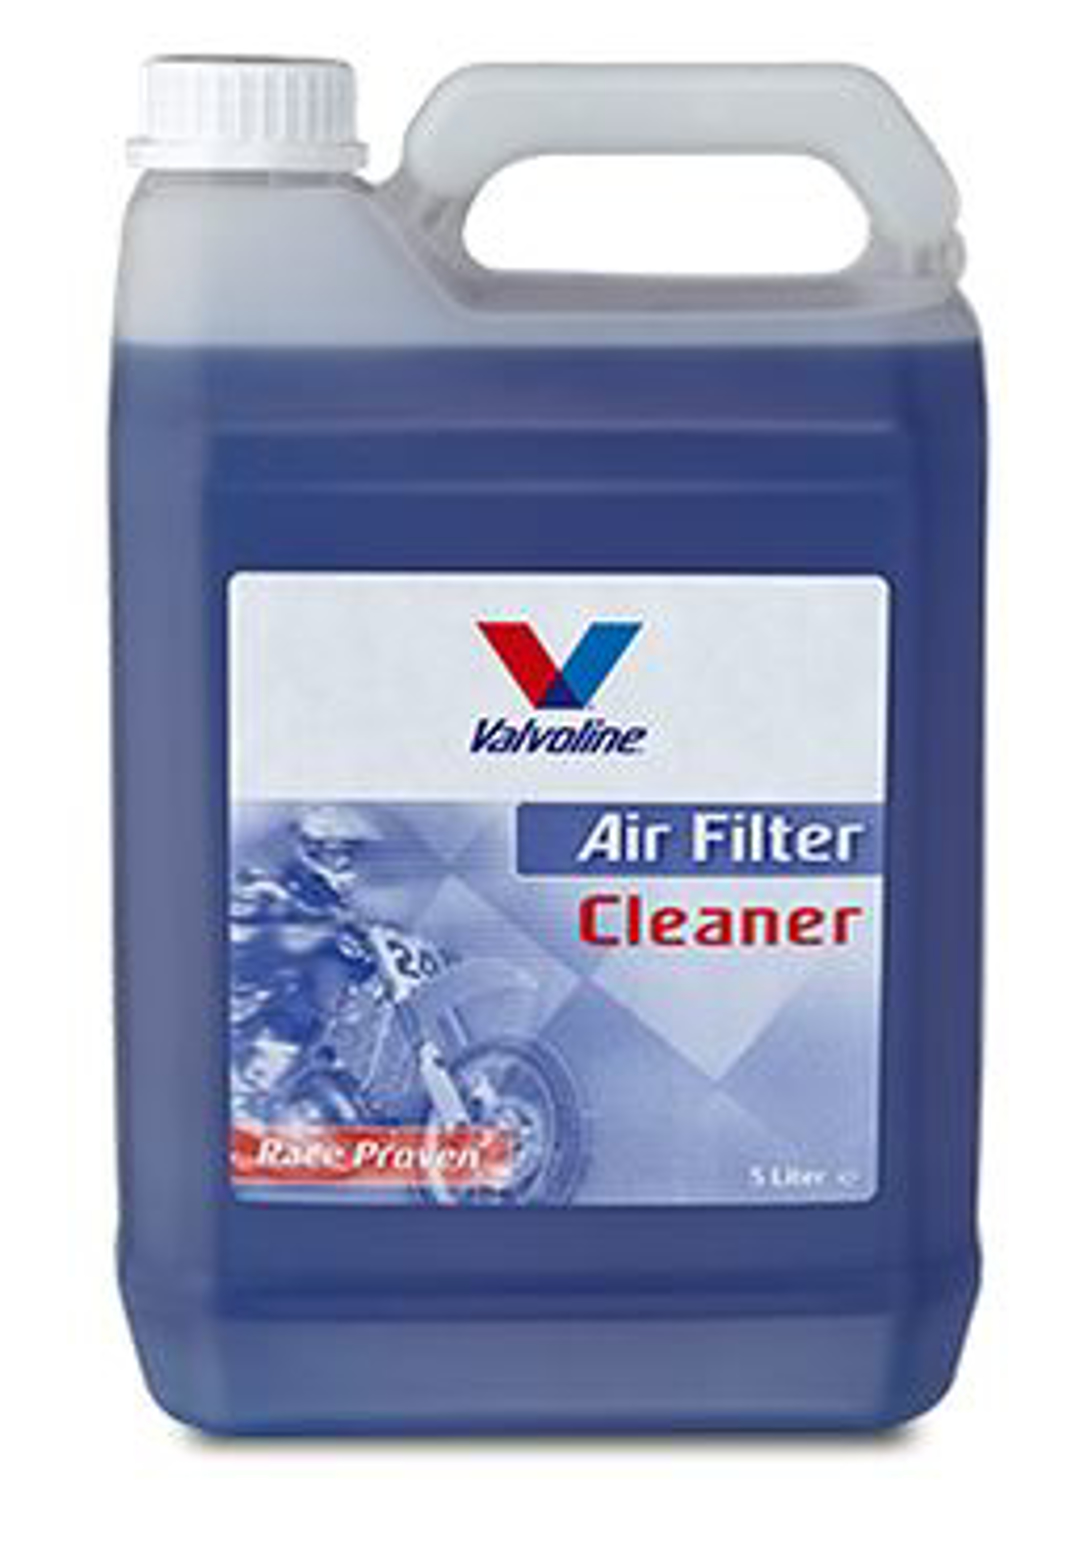 Imagem de Liquido VALVOLINE AIR FILTER CLEANER - 5LT